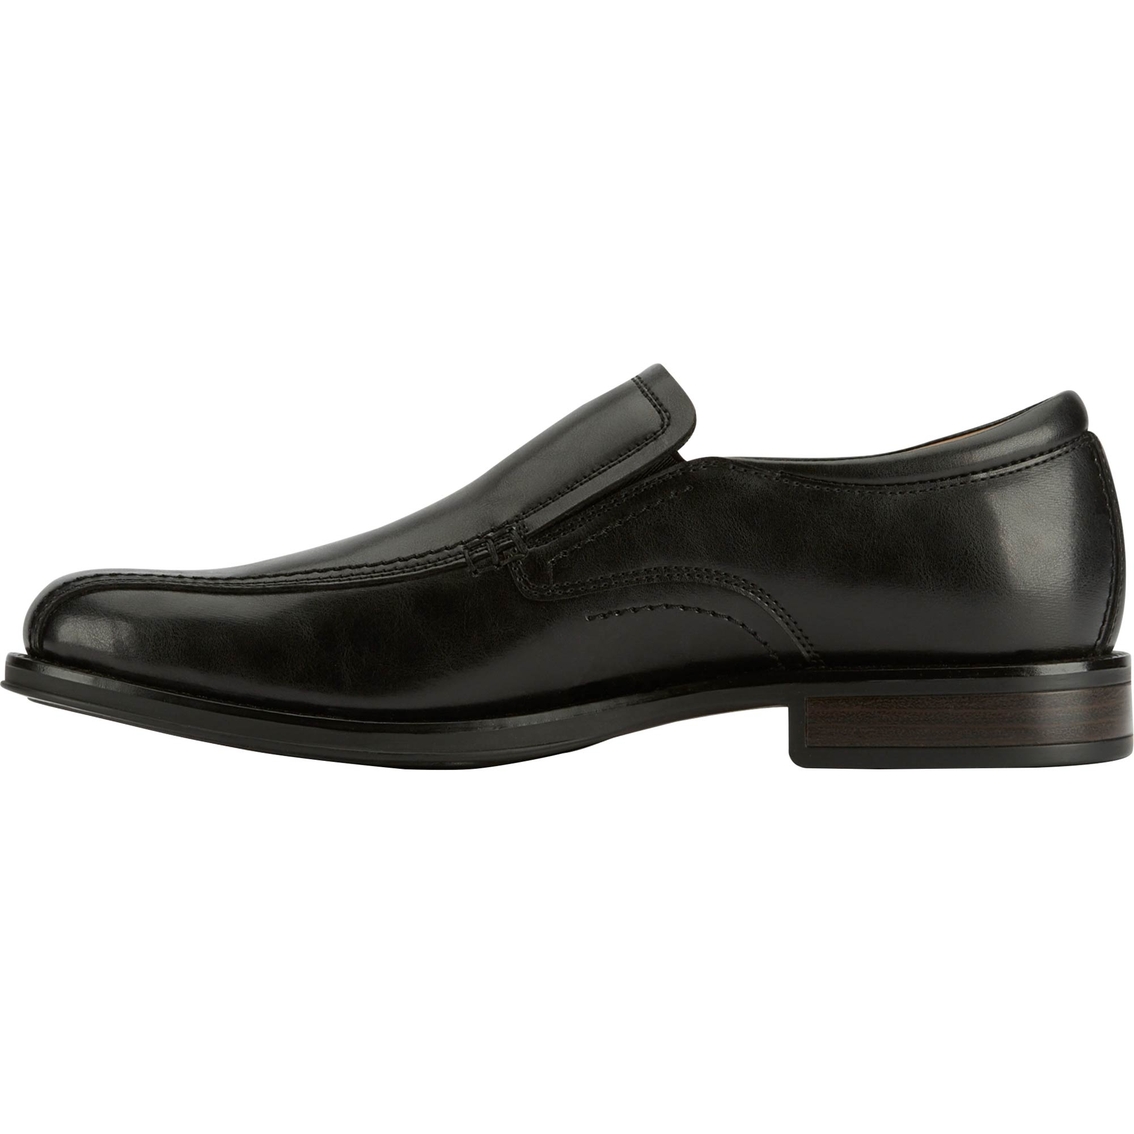 Dockers Greer Black Dress Shoes - Image 3 of 6